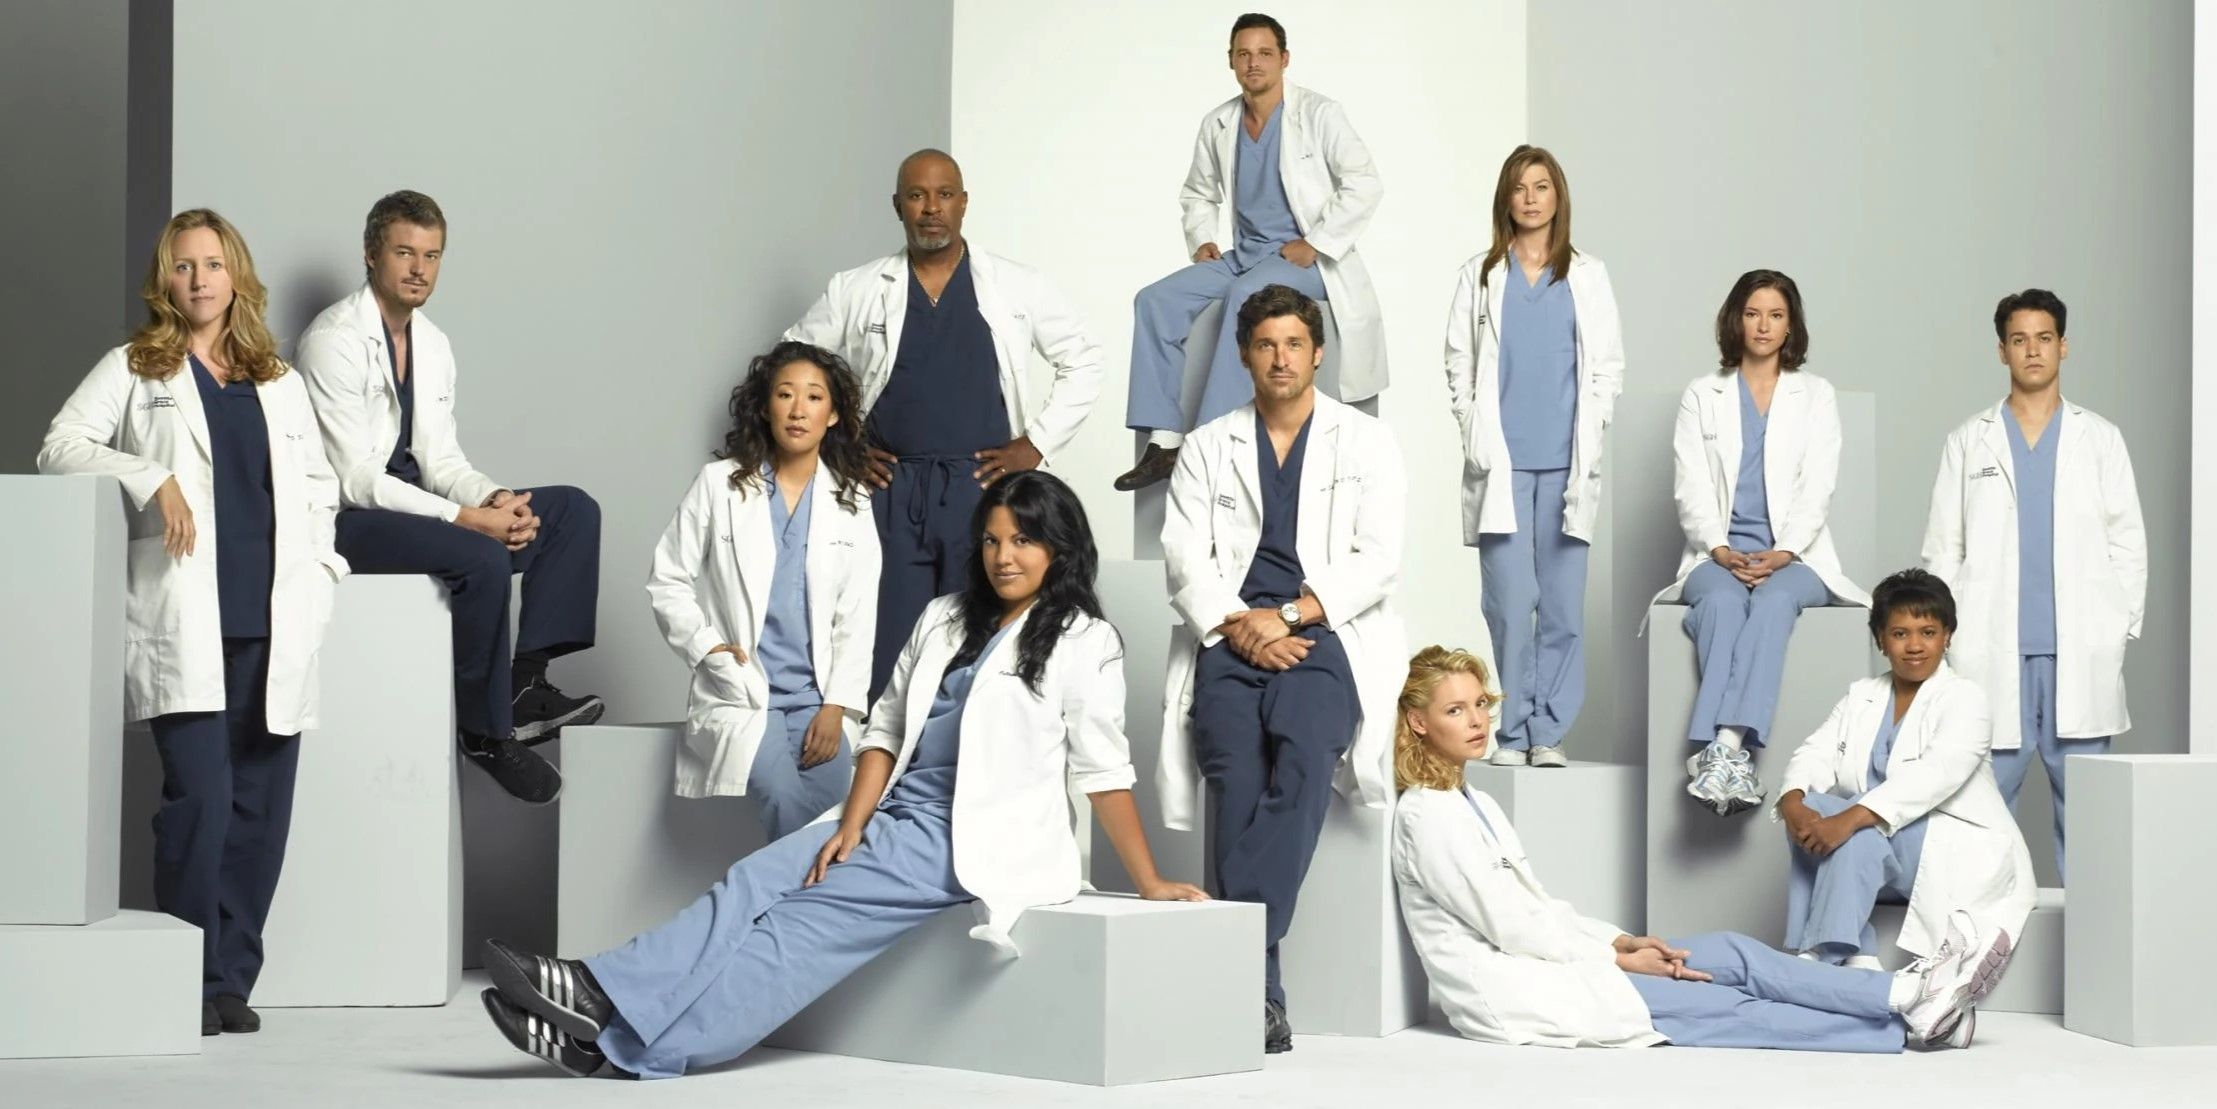 Cast of Grey's Anatomy in Season 4 photoshoot